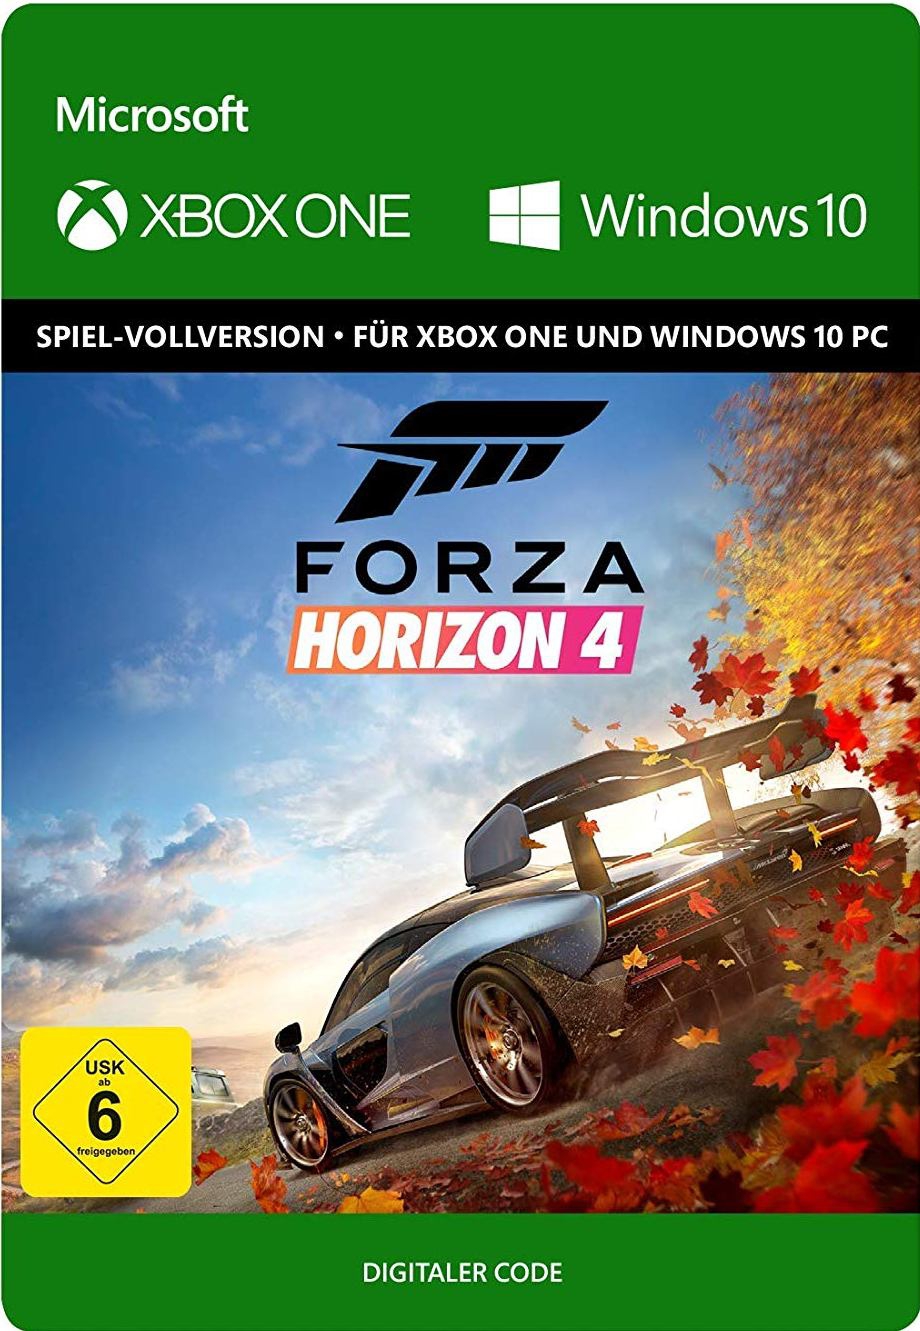 forza horizon 4 pc download microsoft store